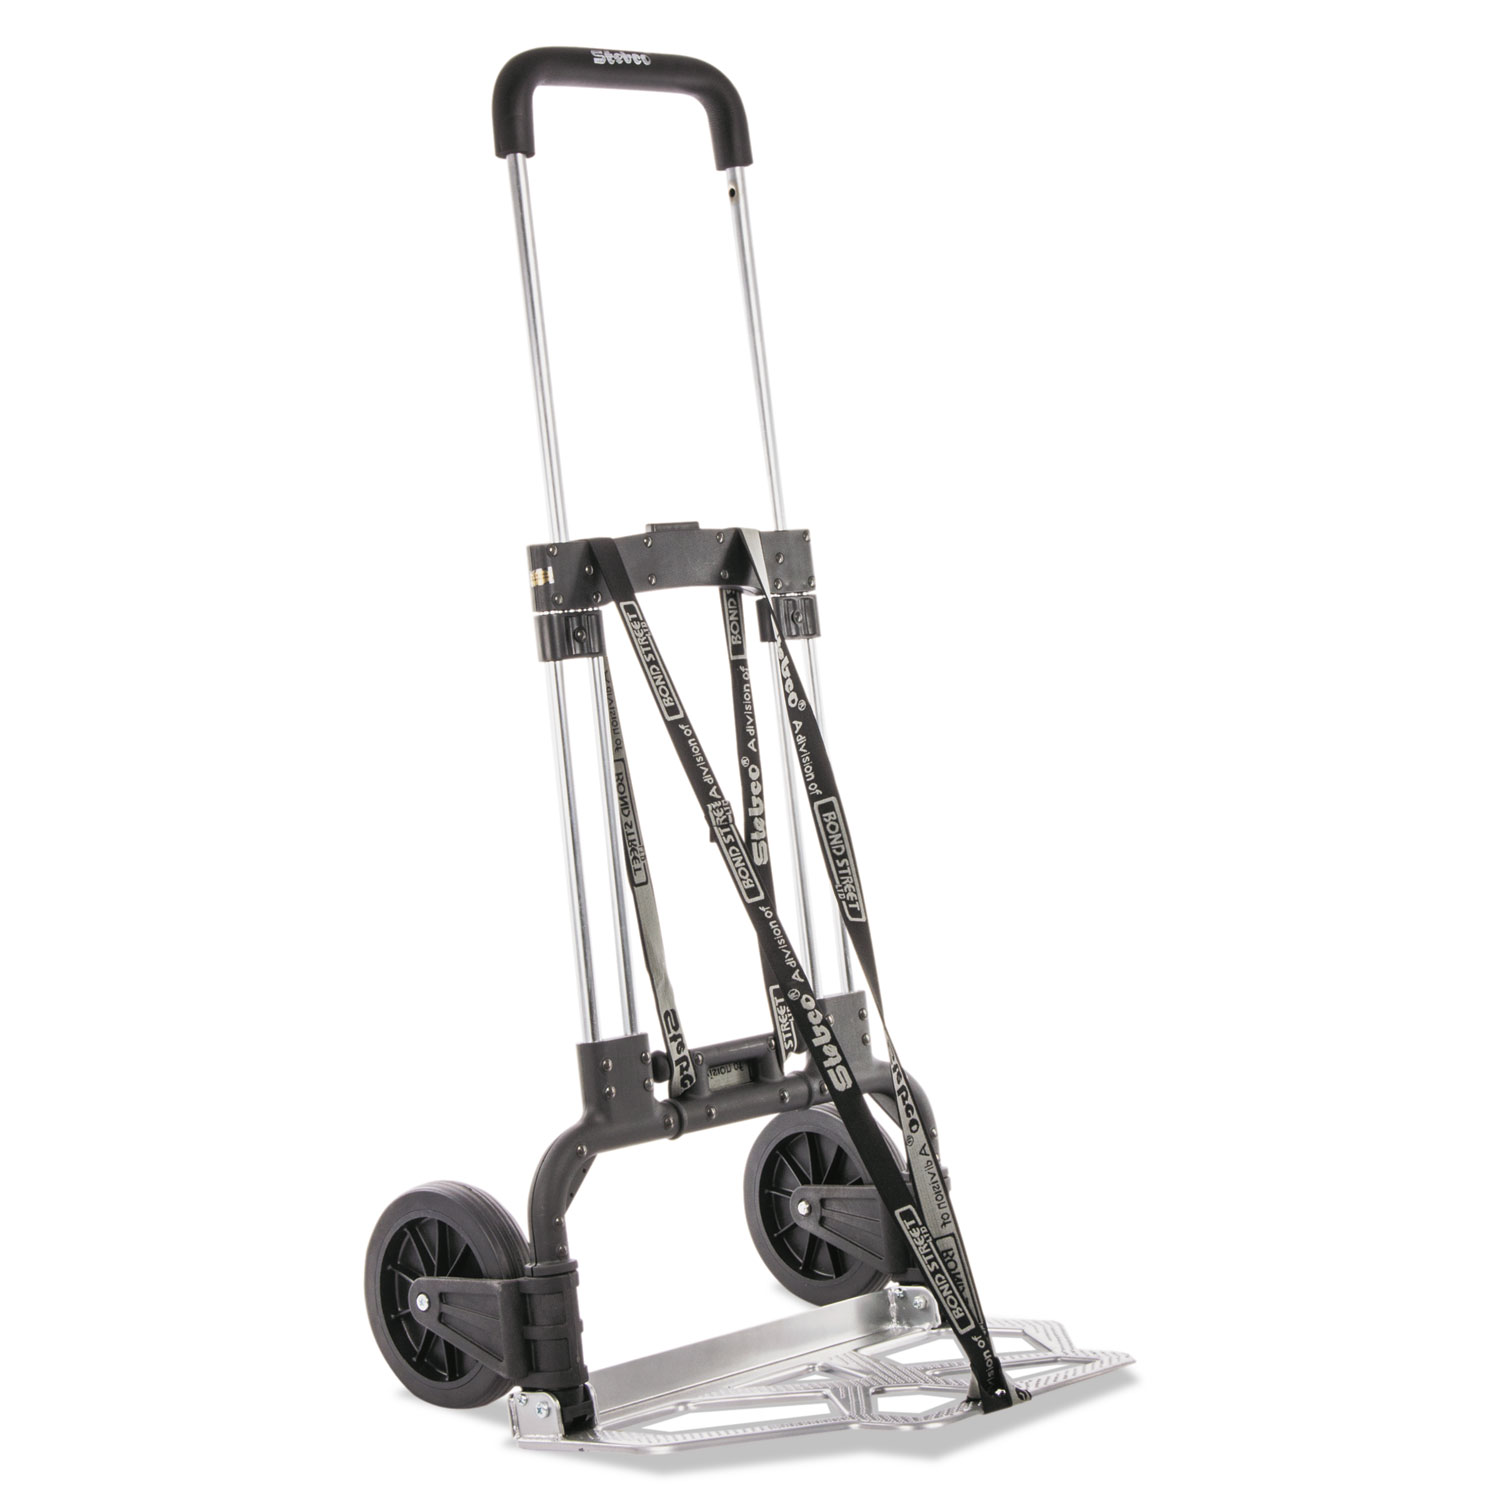 Portable Slide-Flat Cart, 275lbs, 18 3/4 x 19 x 40, Black/Charcoal